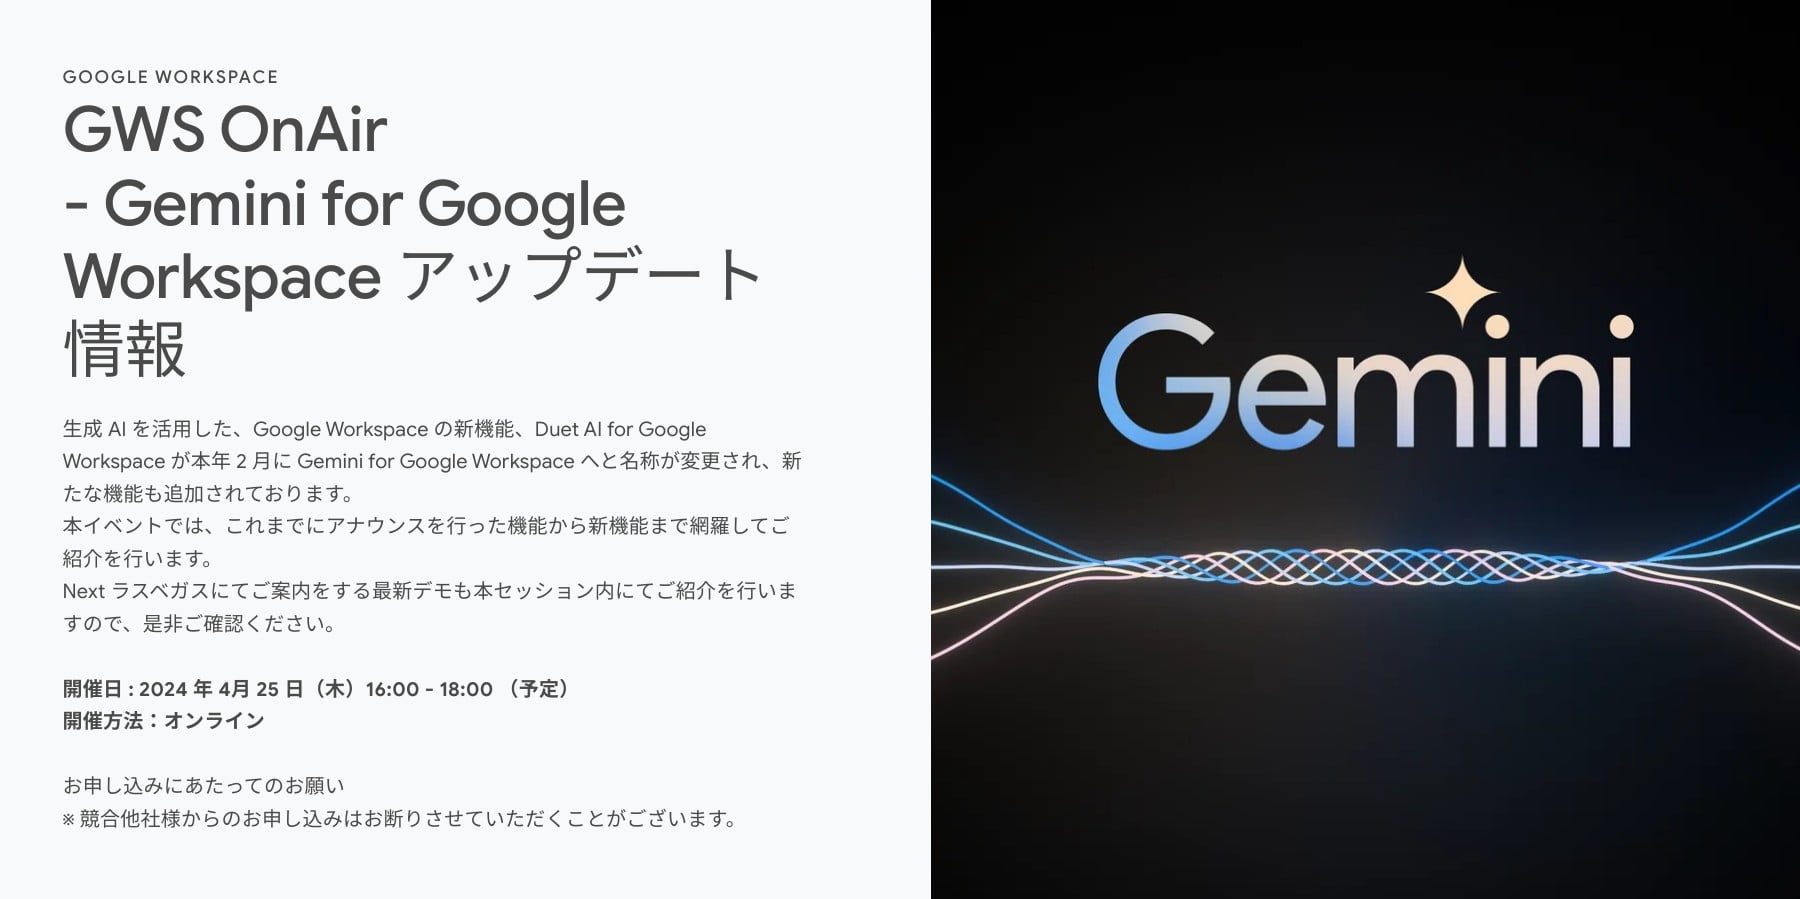 [Google Cloud] GWS OnAir - Gemini for Google Workspace アップデート情報